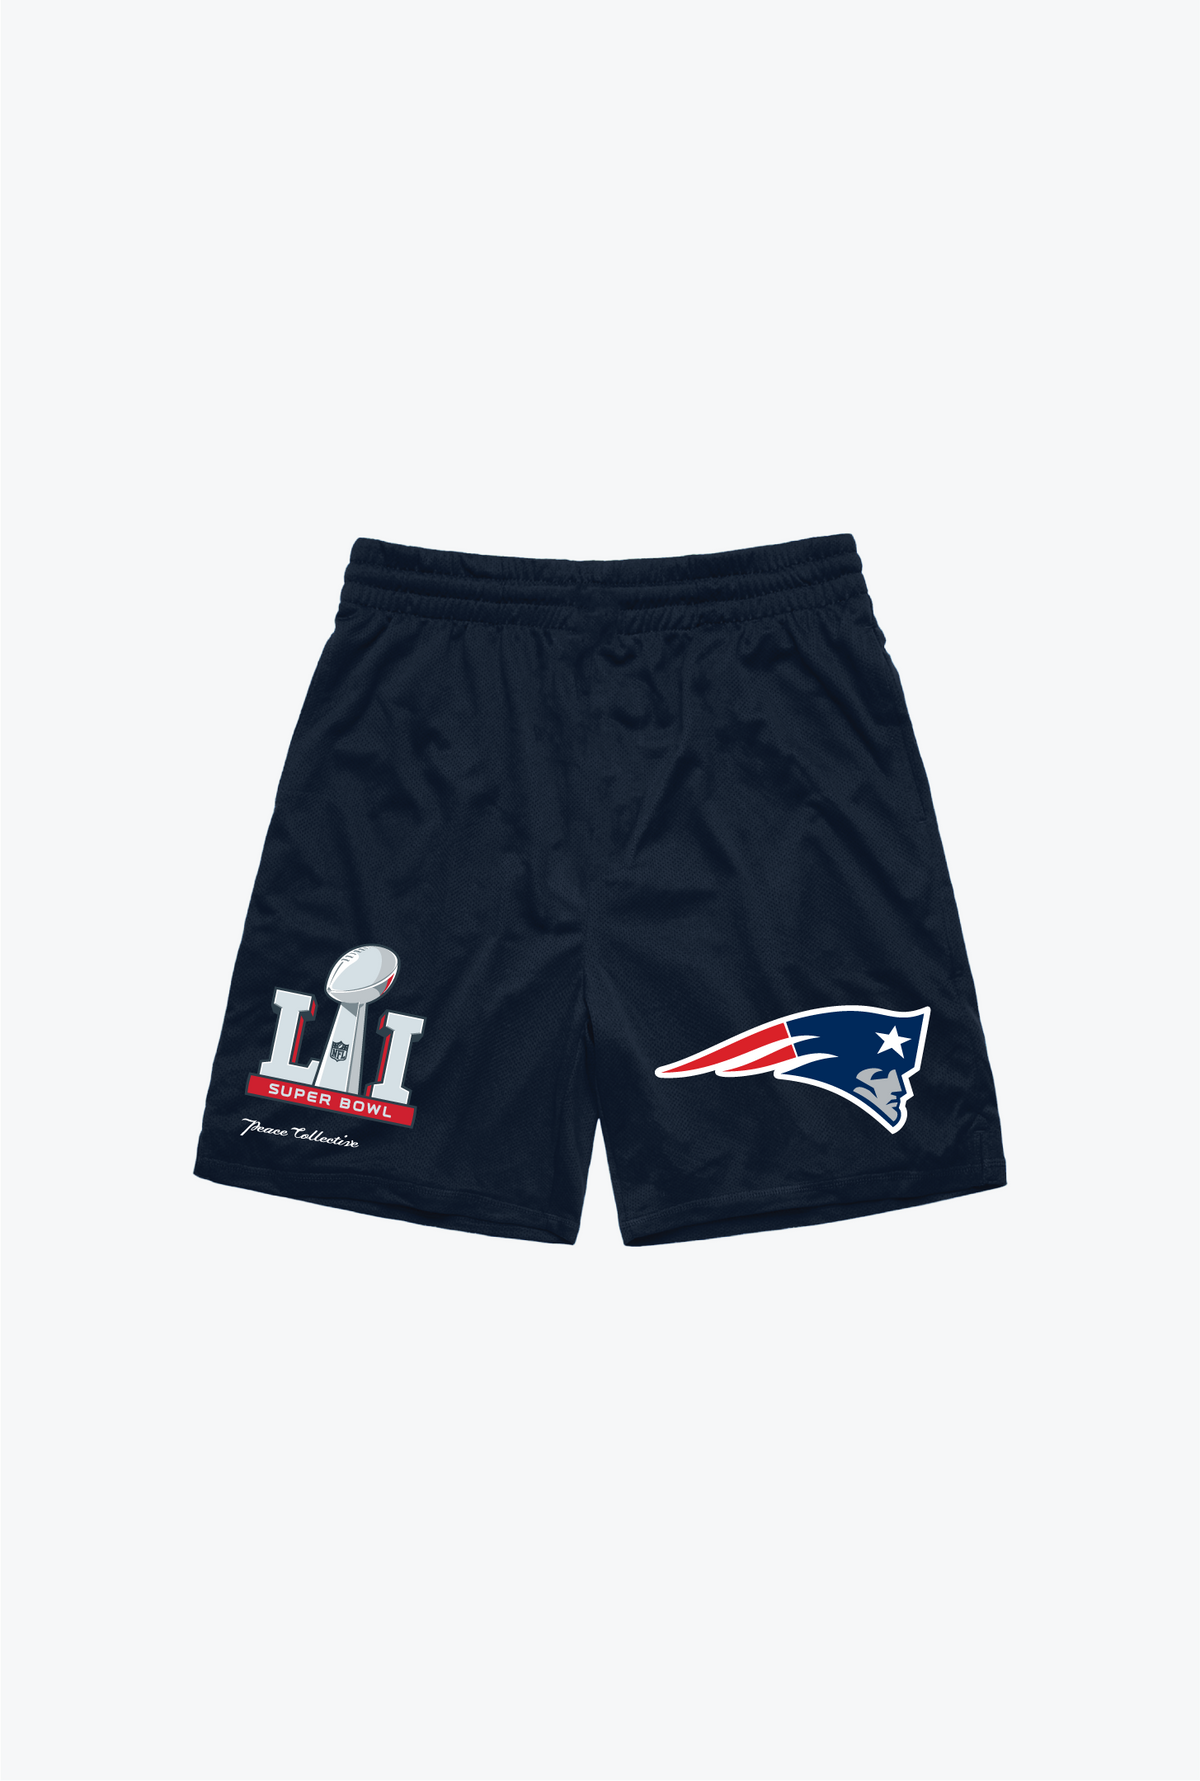 New England Patriots Super Bowl LI Mesh Shorts - Black